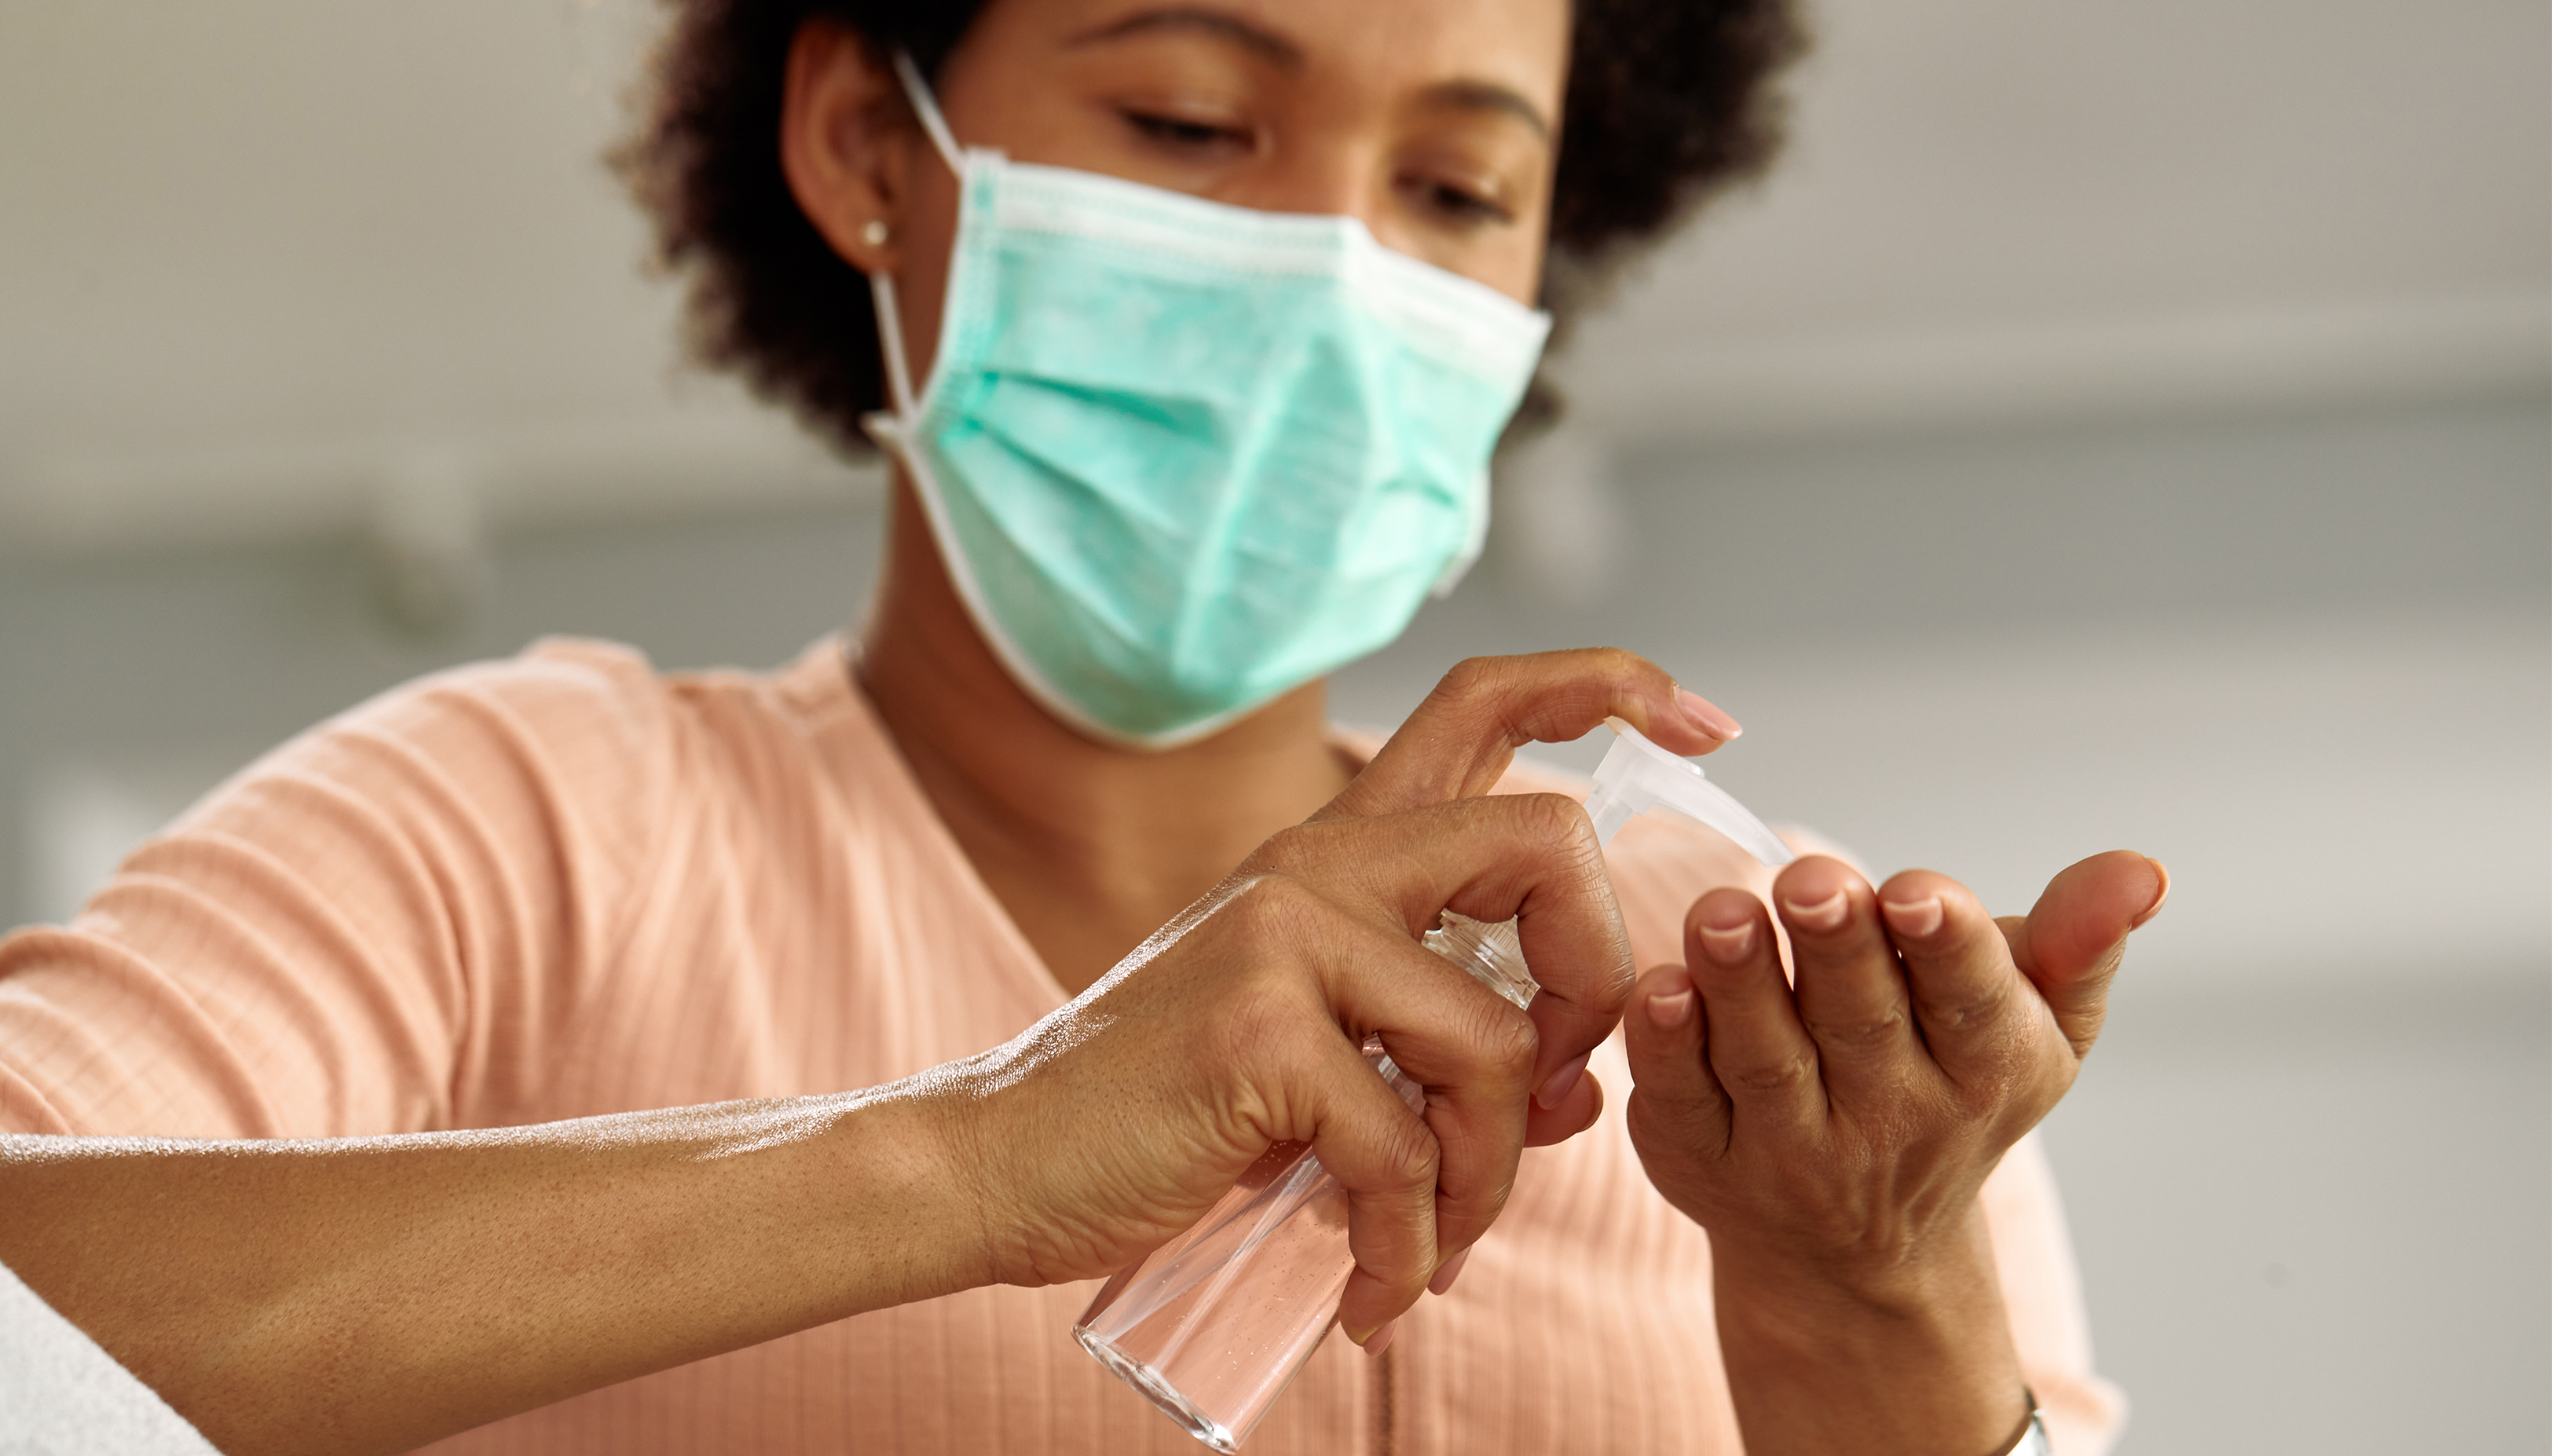 Woman wearing face mask using hand sanitizer